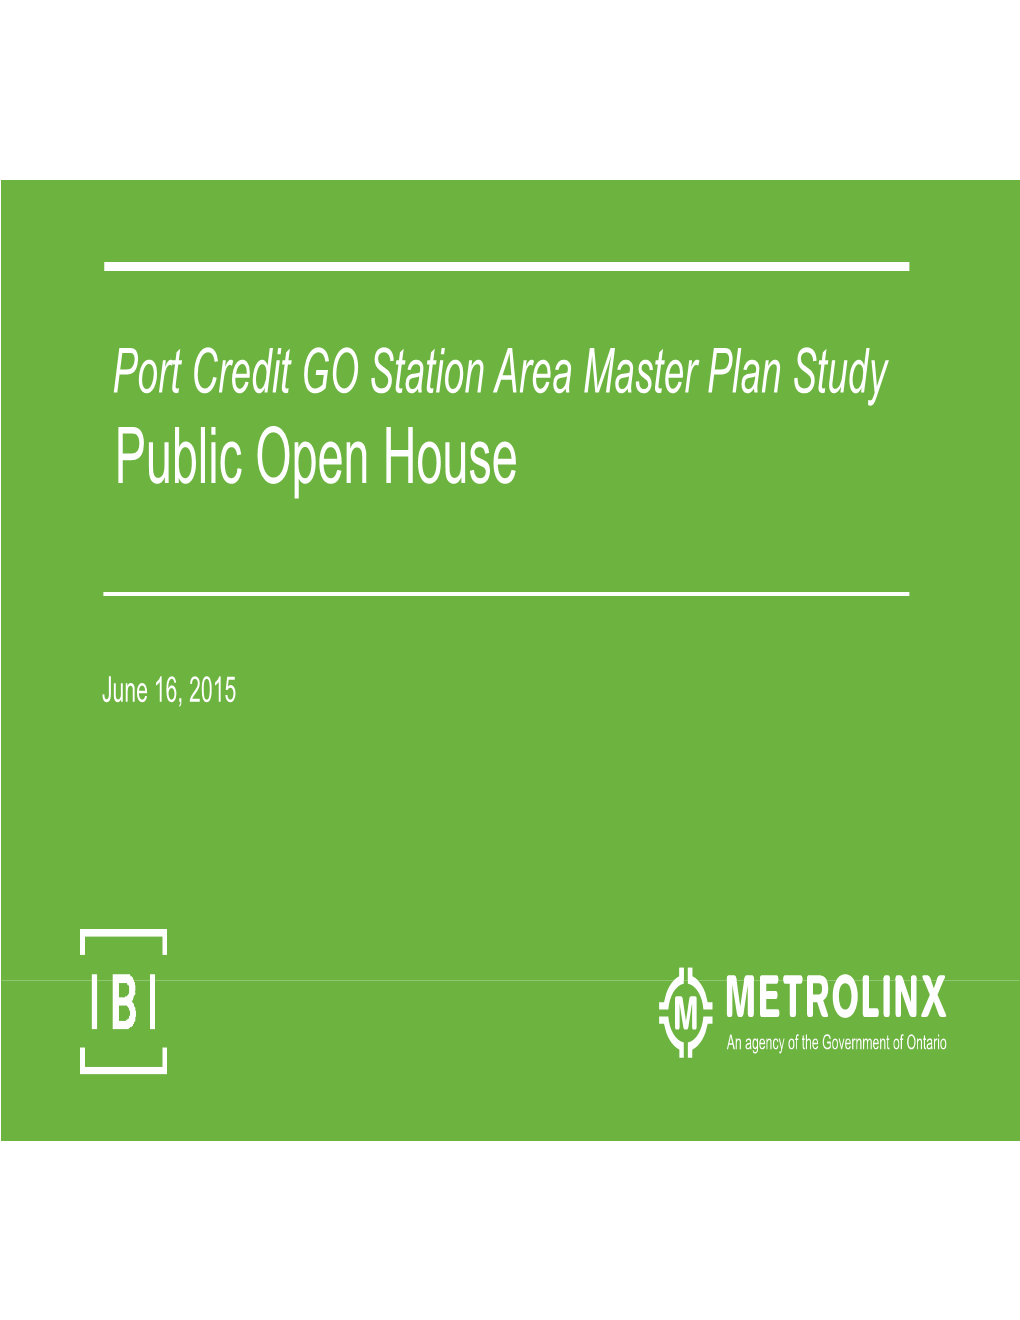 Port Credit GO Station Area Master Plan Study Public Open House